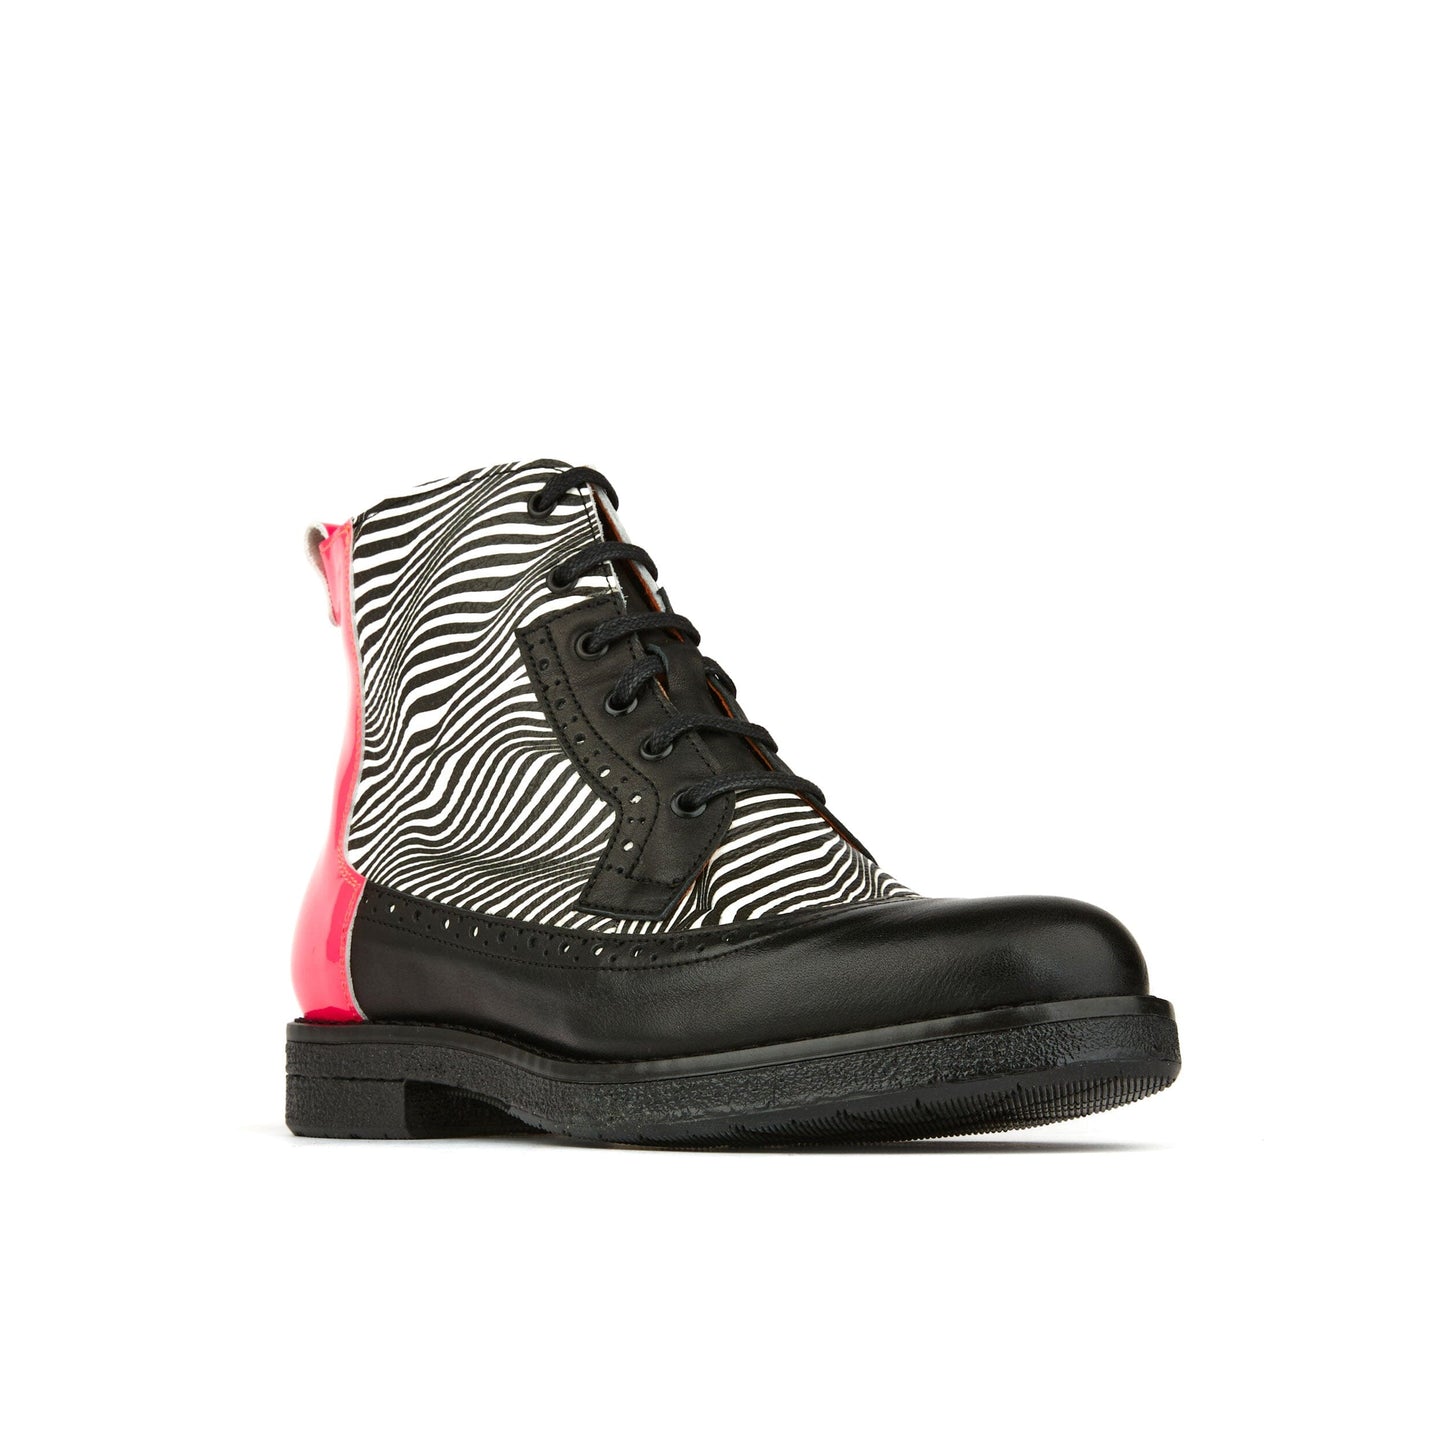 Hatter - Optical Zebra & Black & Pink Womens Ankle Boots Embassy London 